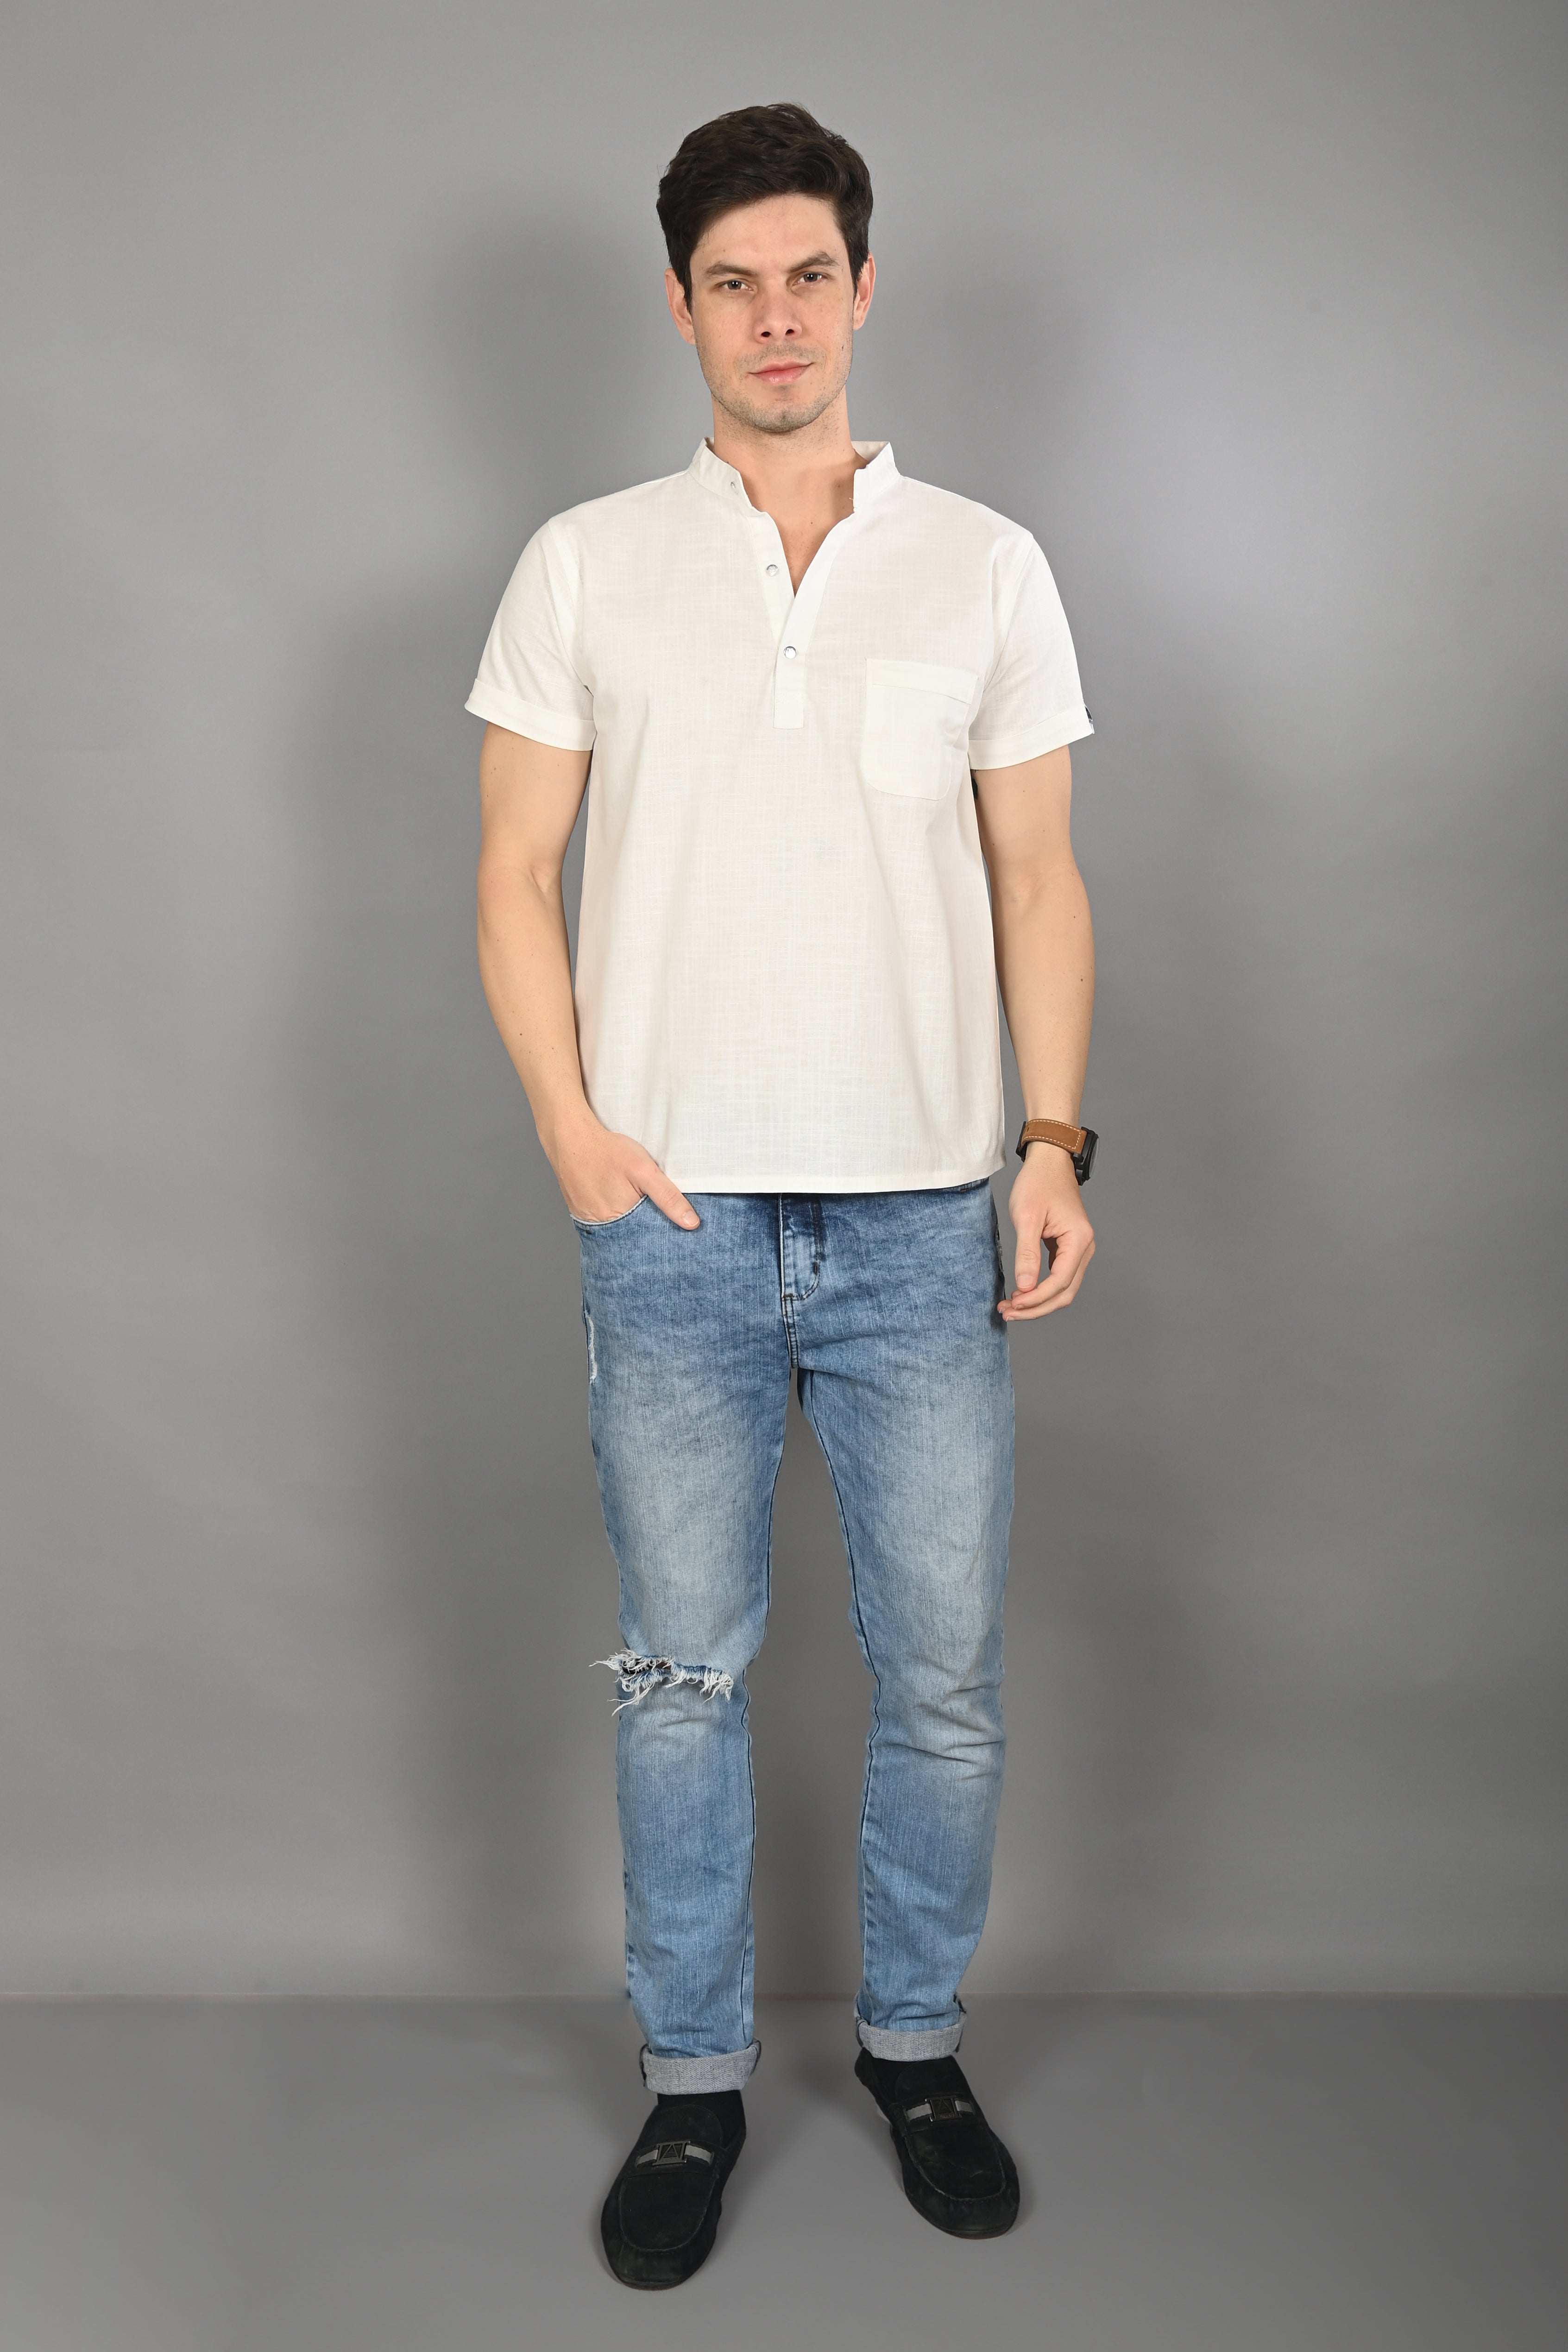 Men's White Casual Shirt